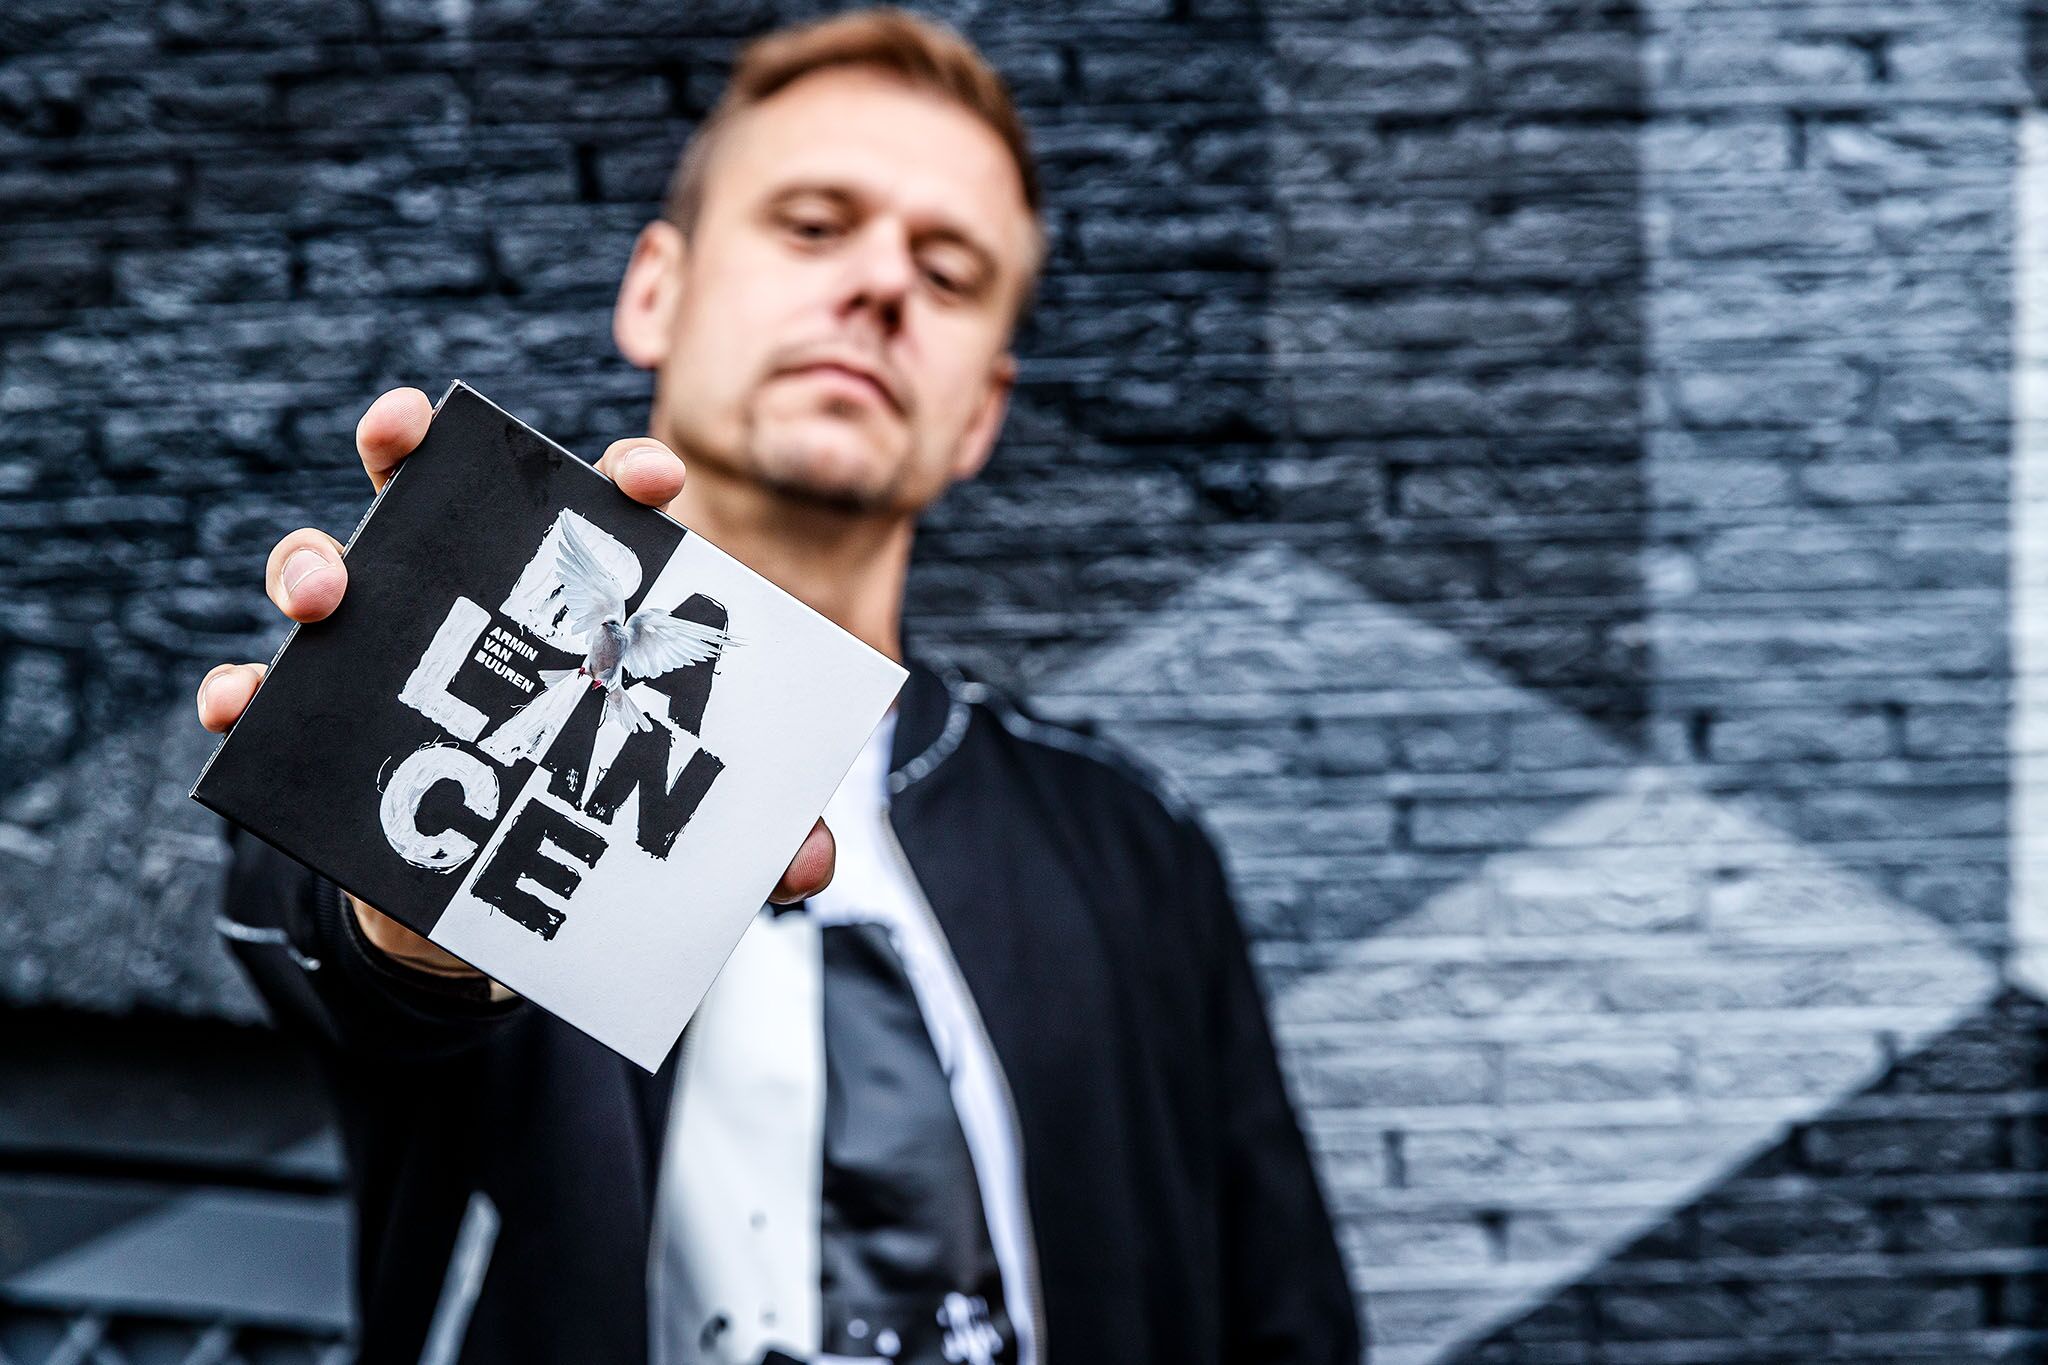 Armin van Buuren teams up with renowned street artists for release of seventh artist album Balance